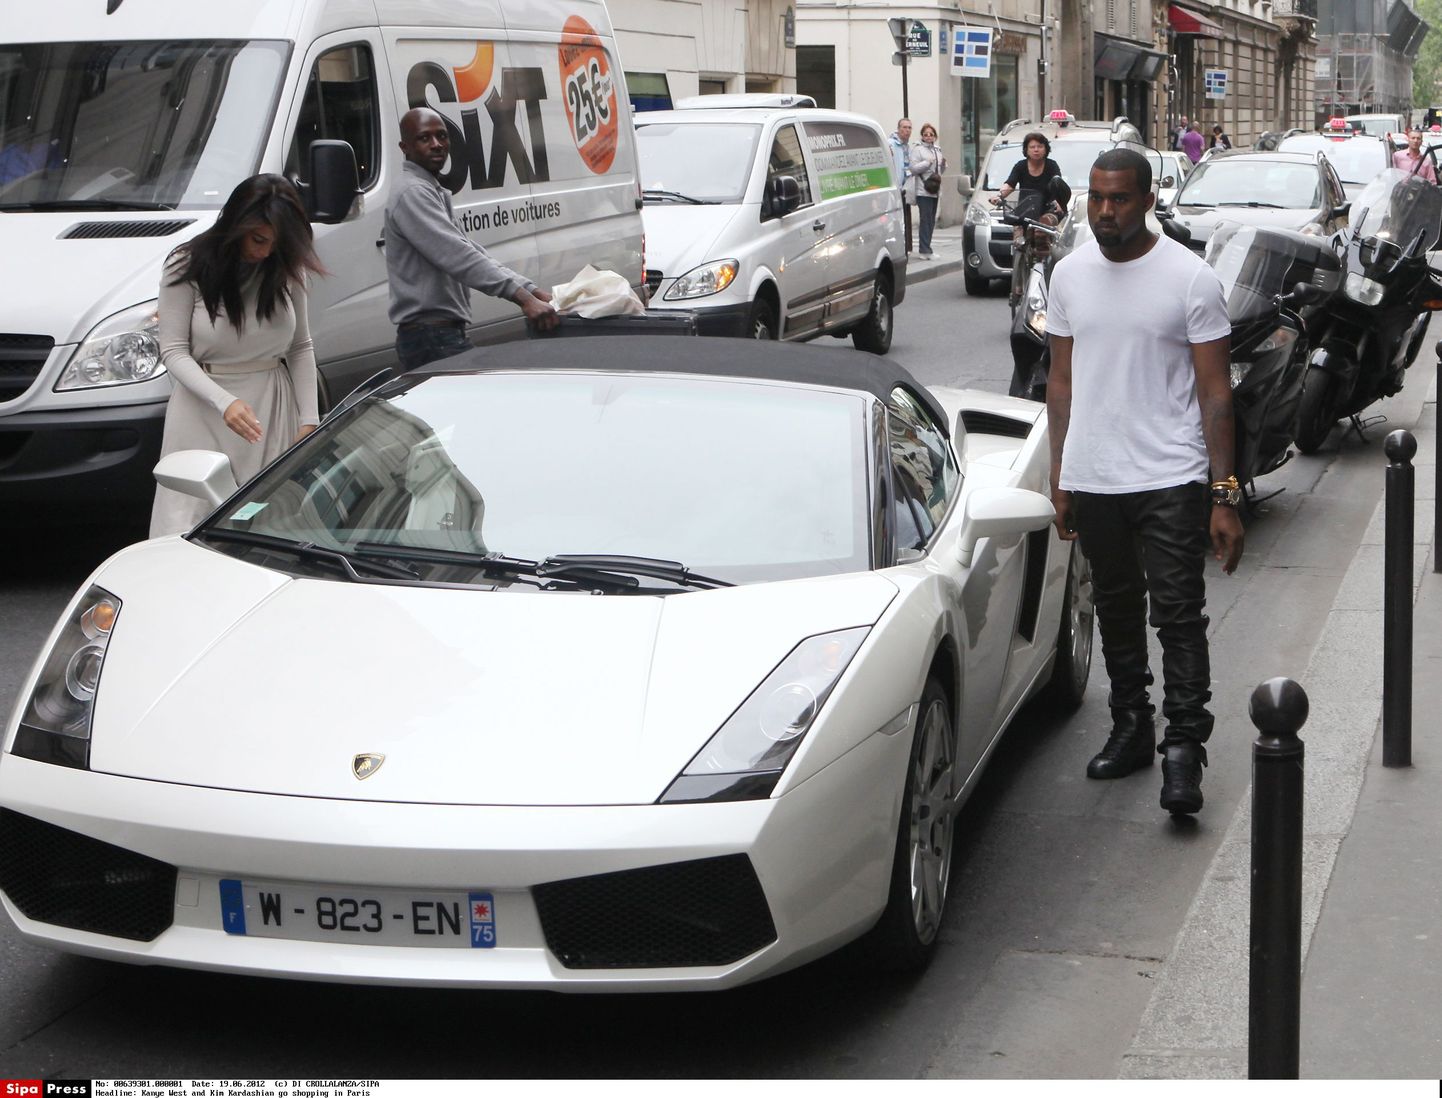 Kanye West and Kim  Kardashian go to Othello accessory shop in France . Paris, FRANCE - 19/06/2012/CROLLALANZA_Goffredo_A_001/1206191715/Credit:DI CROLLALANZA/SIPA/1206191715